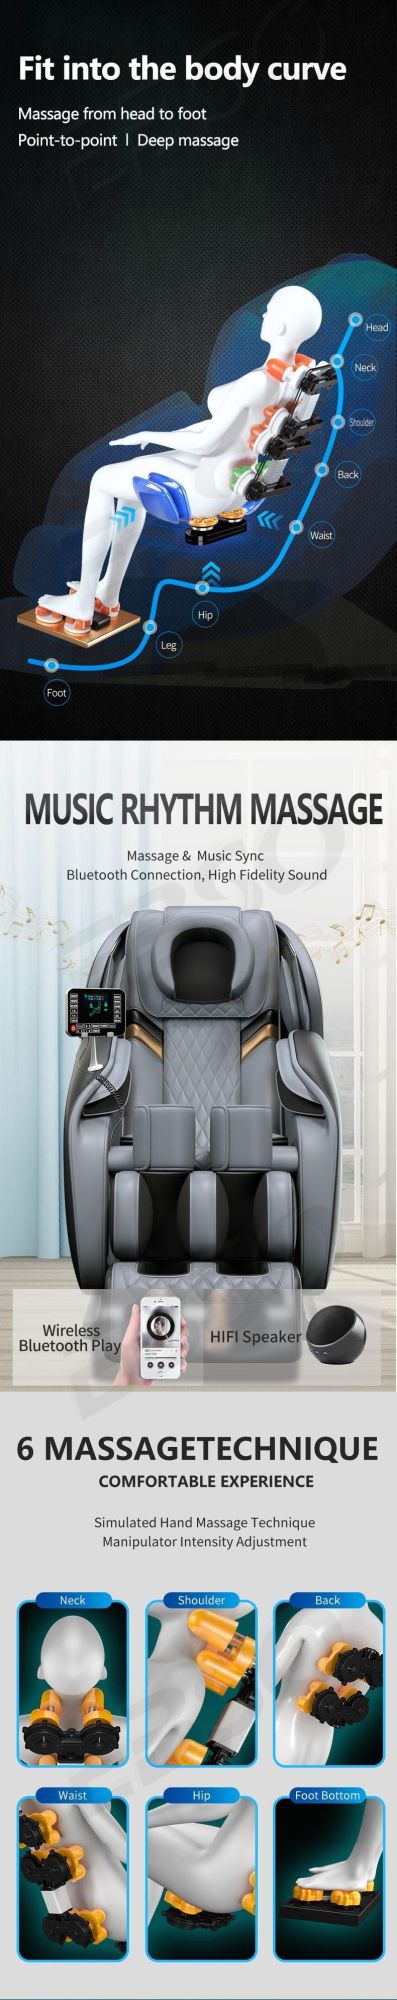 U Type Pillow Zero Gravity Full Body Massage Chair Deep Massage Chair